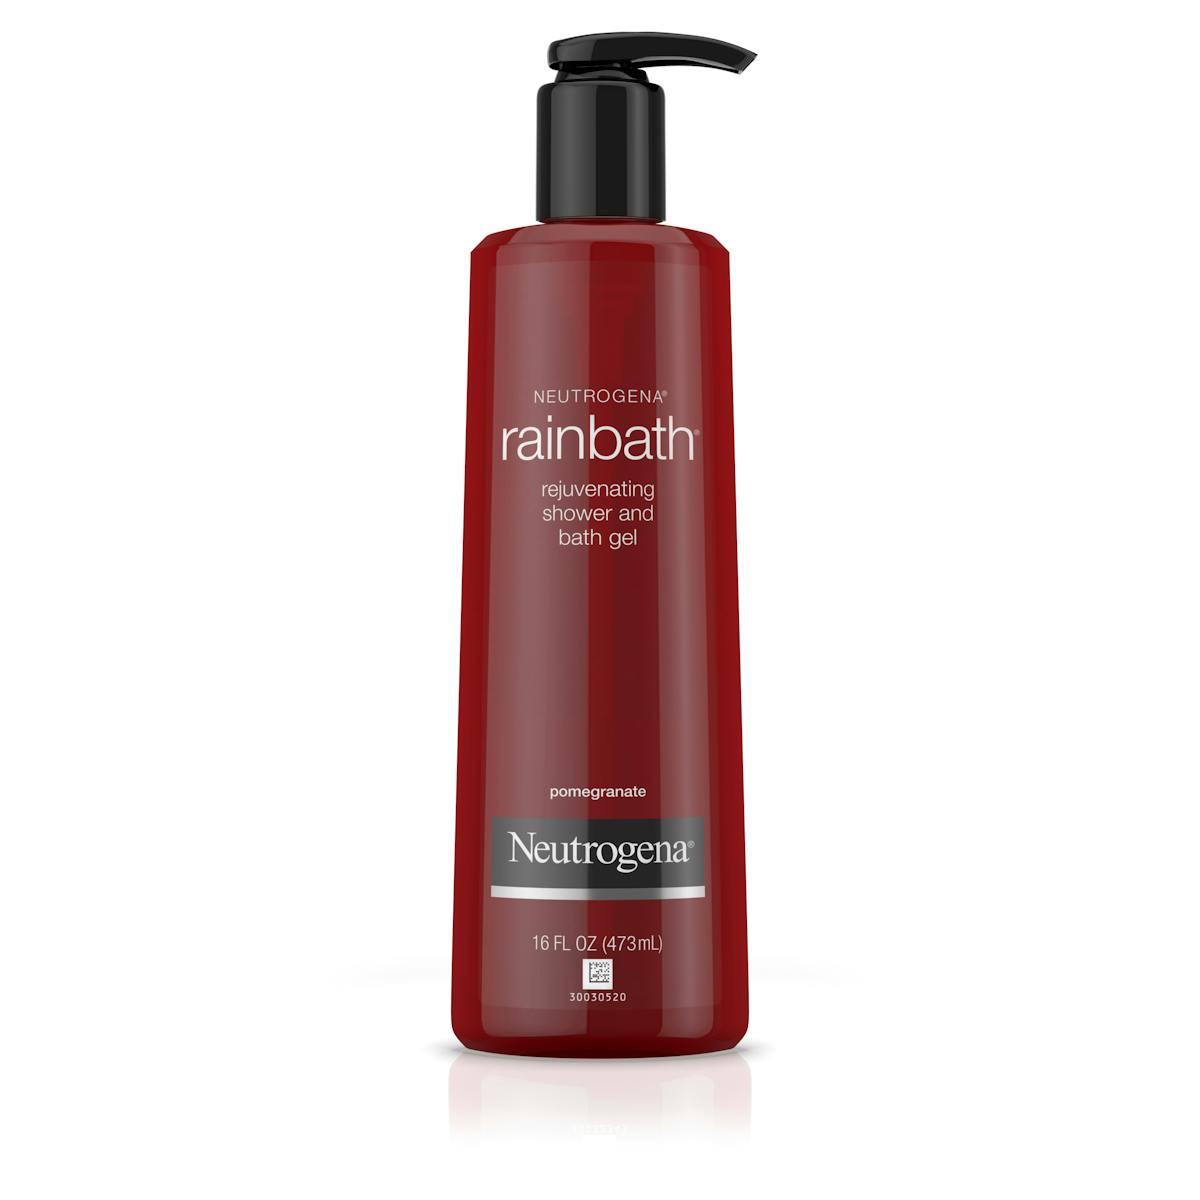 Tol avontuur Verspilling Rainbath® Rejuvenating Shower and Bath Gel, Pomegranate | Neutrogena®